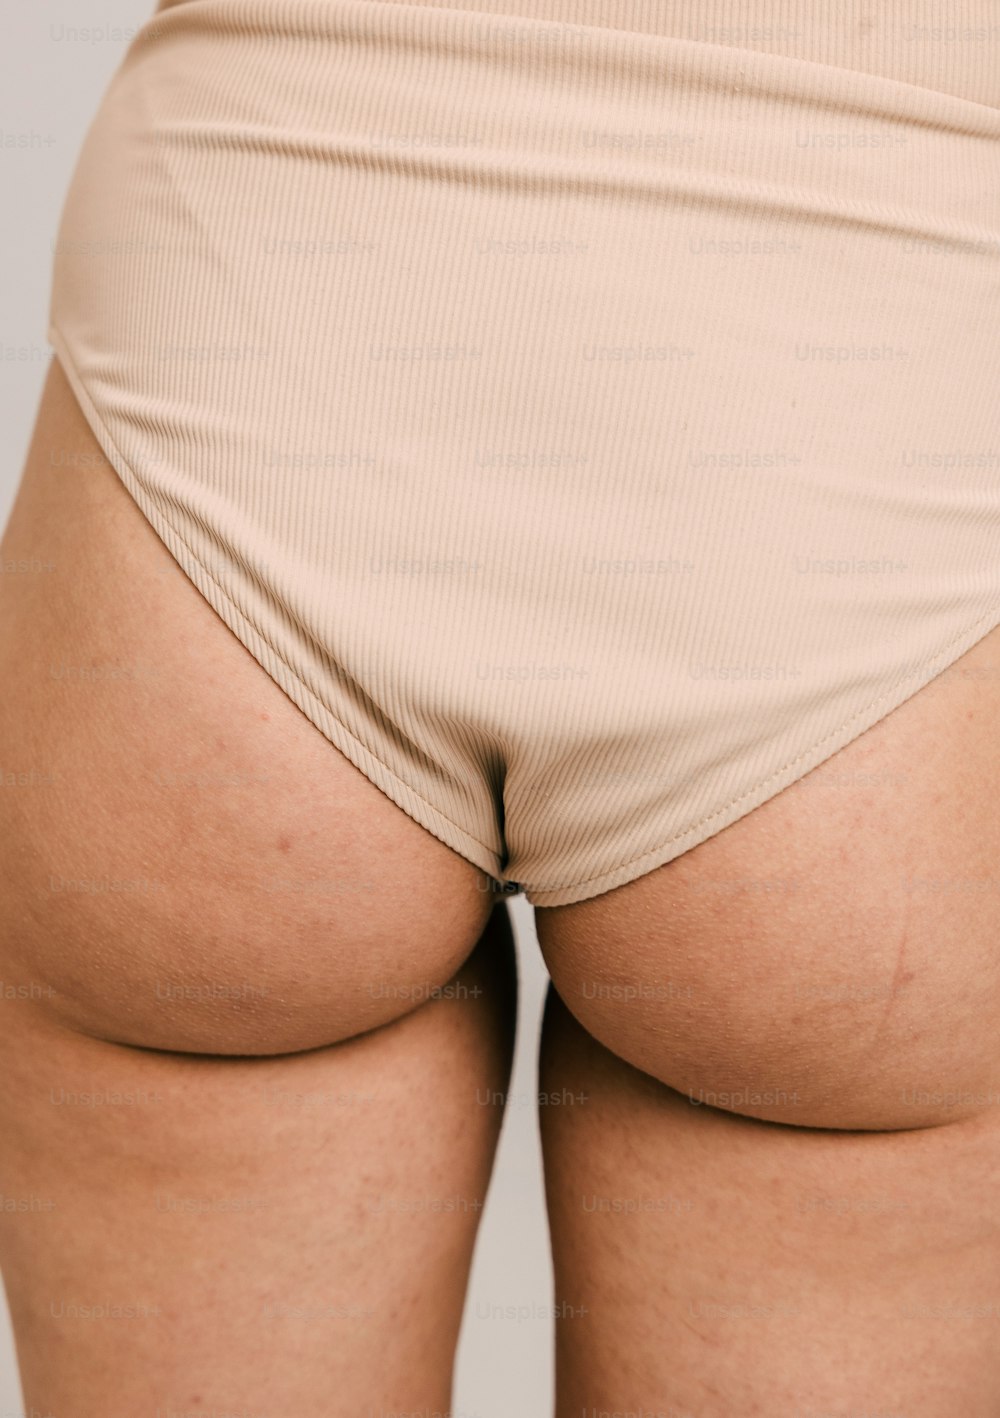 Underwear Model Pictures  Download Free Images on Unsplash